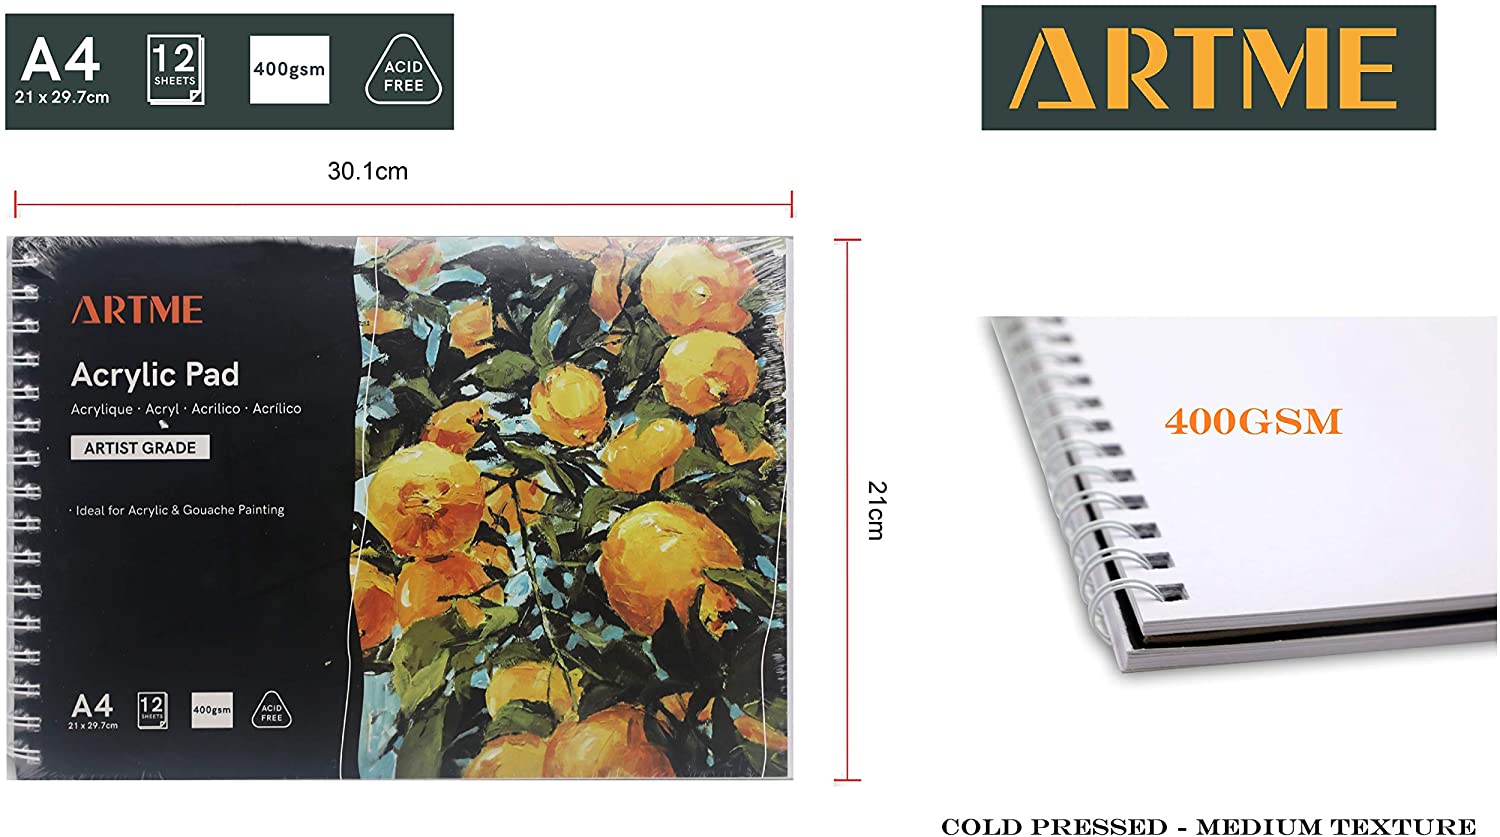 ARTME A4 Acrylic Pad 12 Sheets 400gsm - 1pk